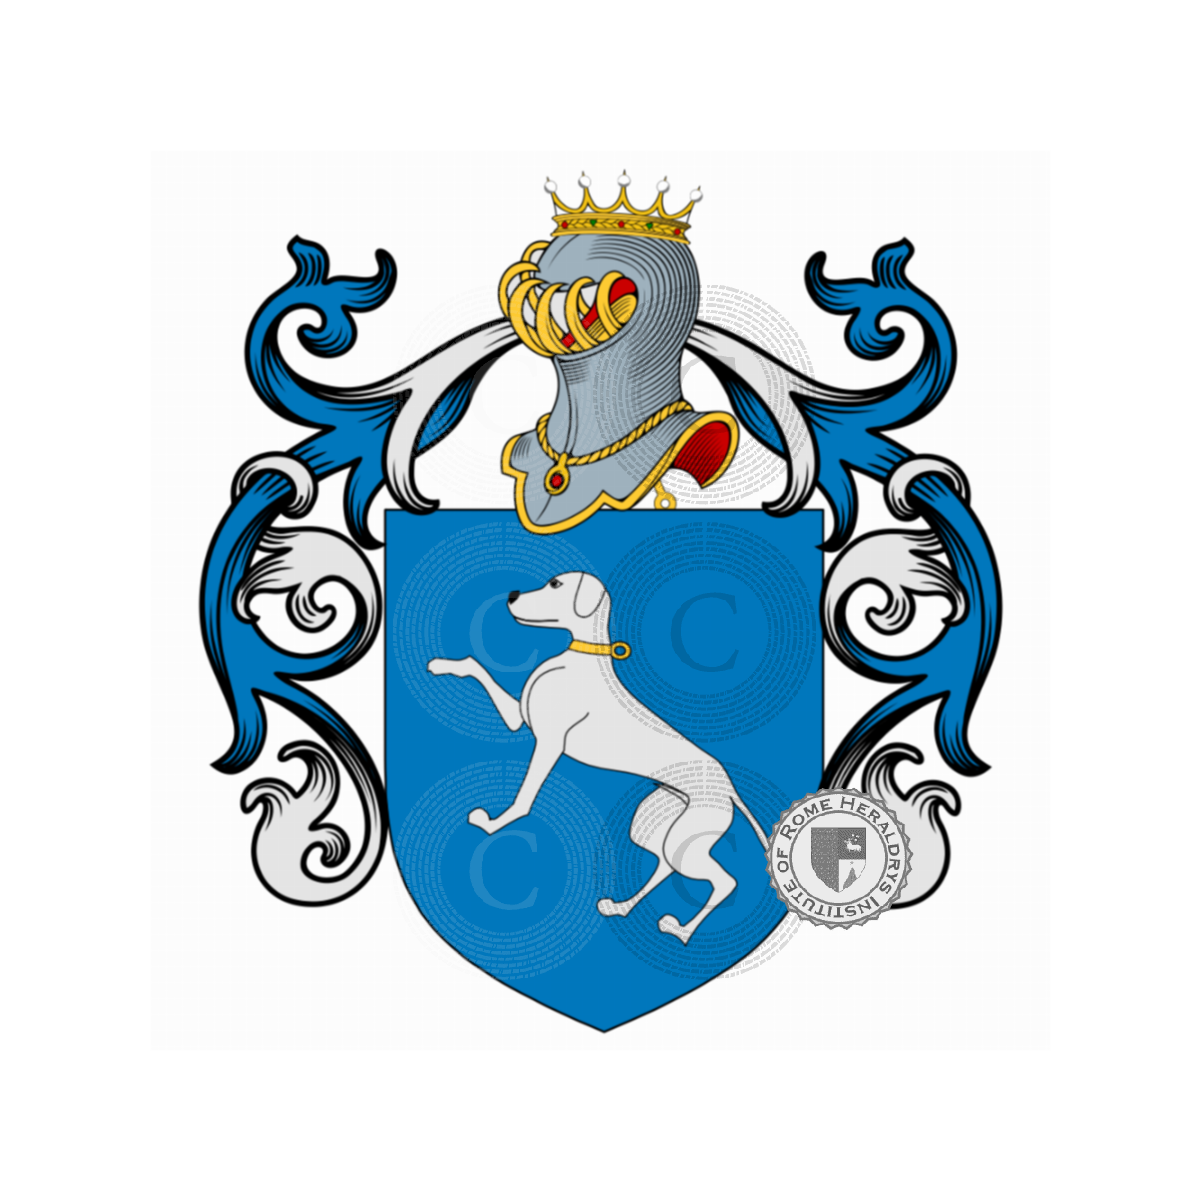 Wappen der Familiedella Bianca